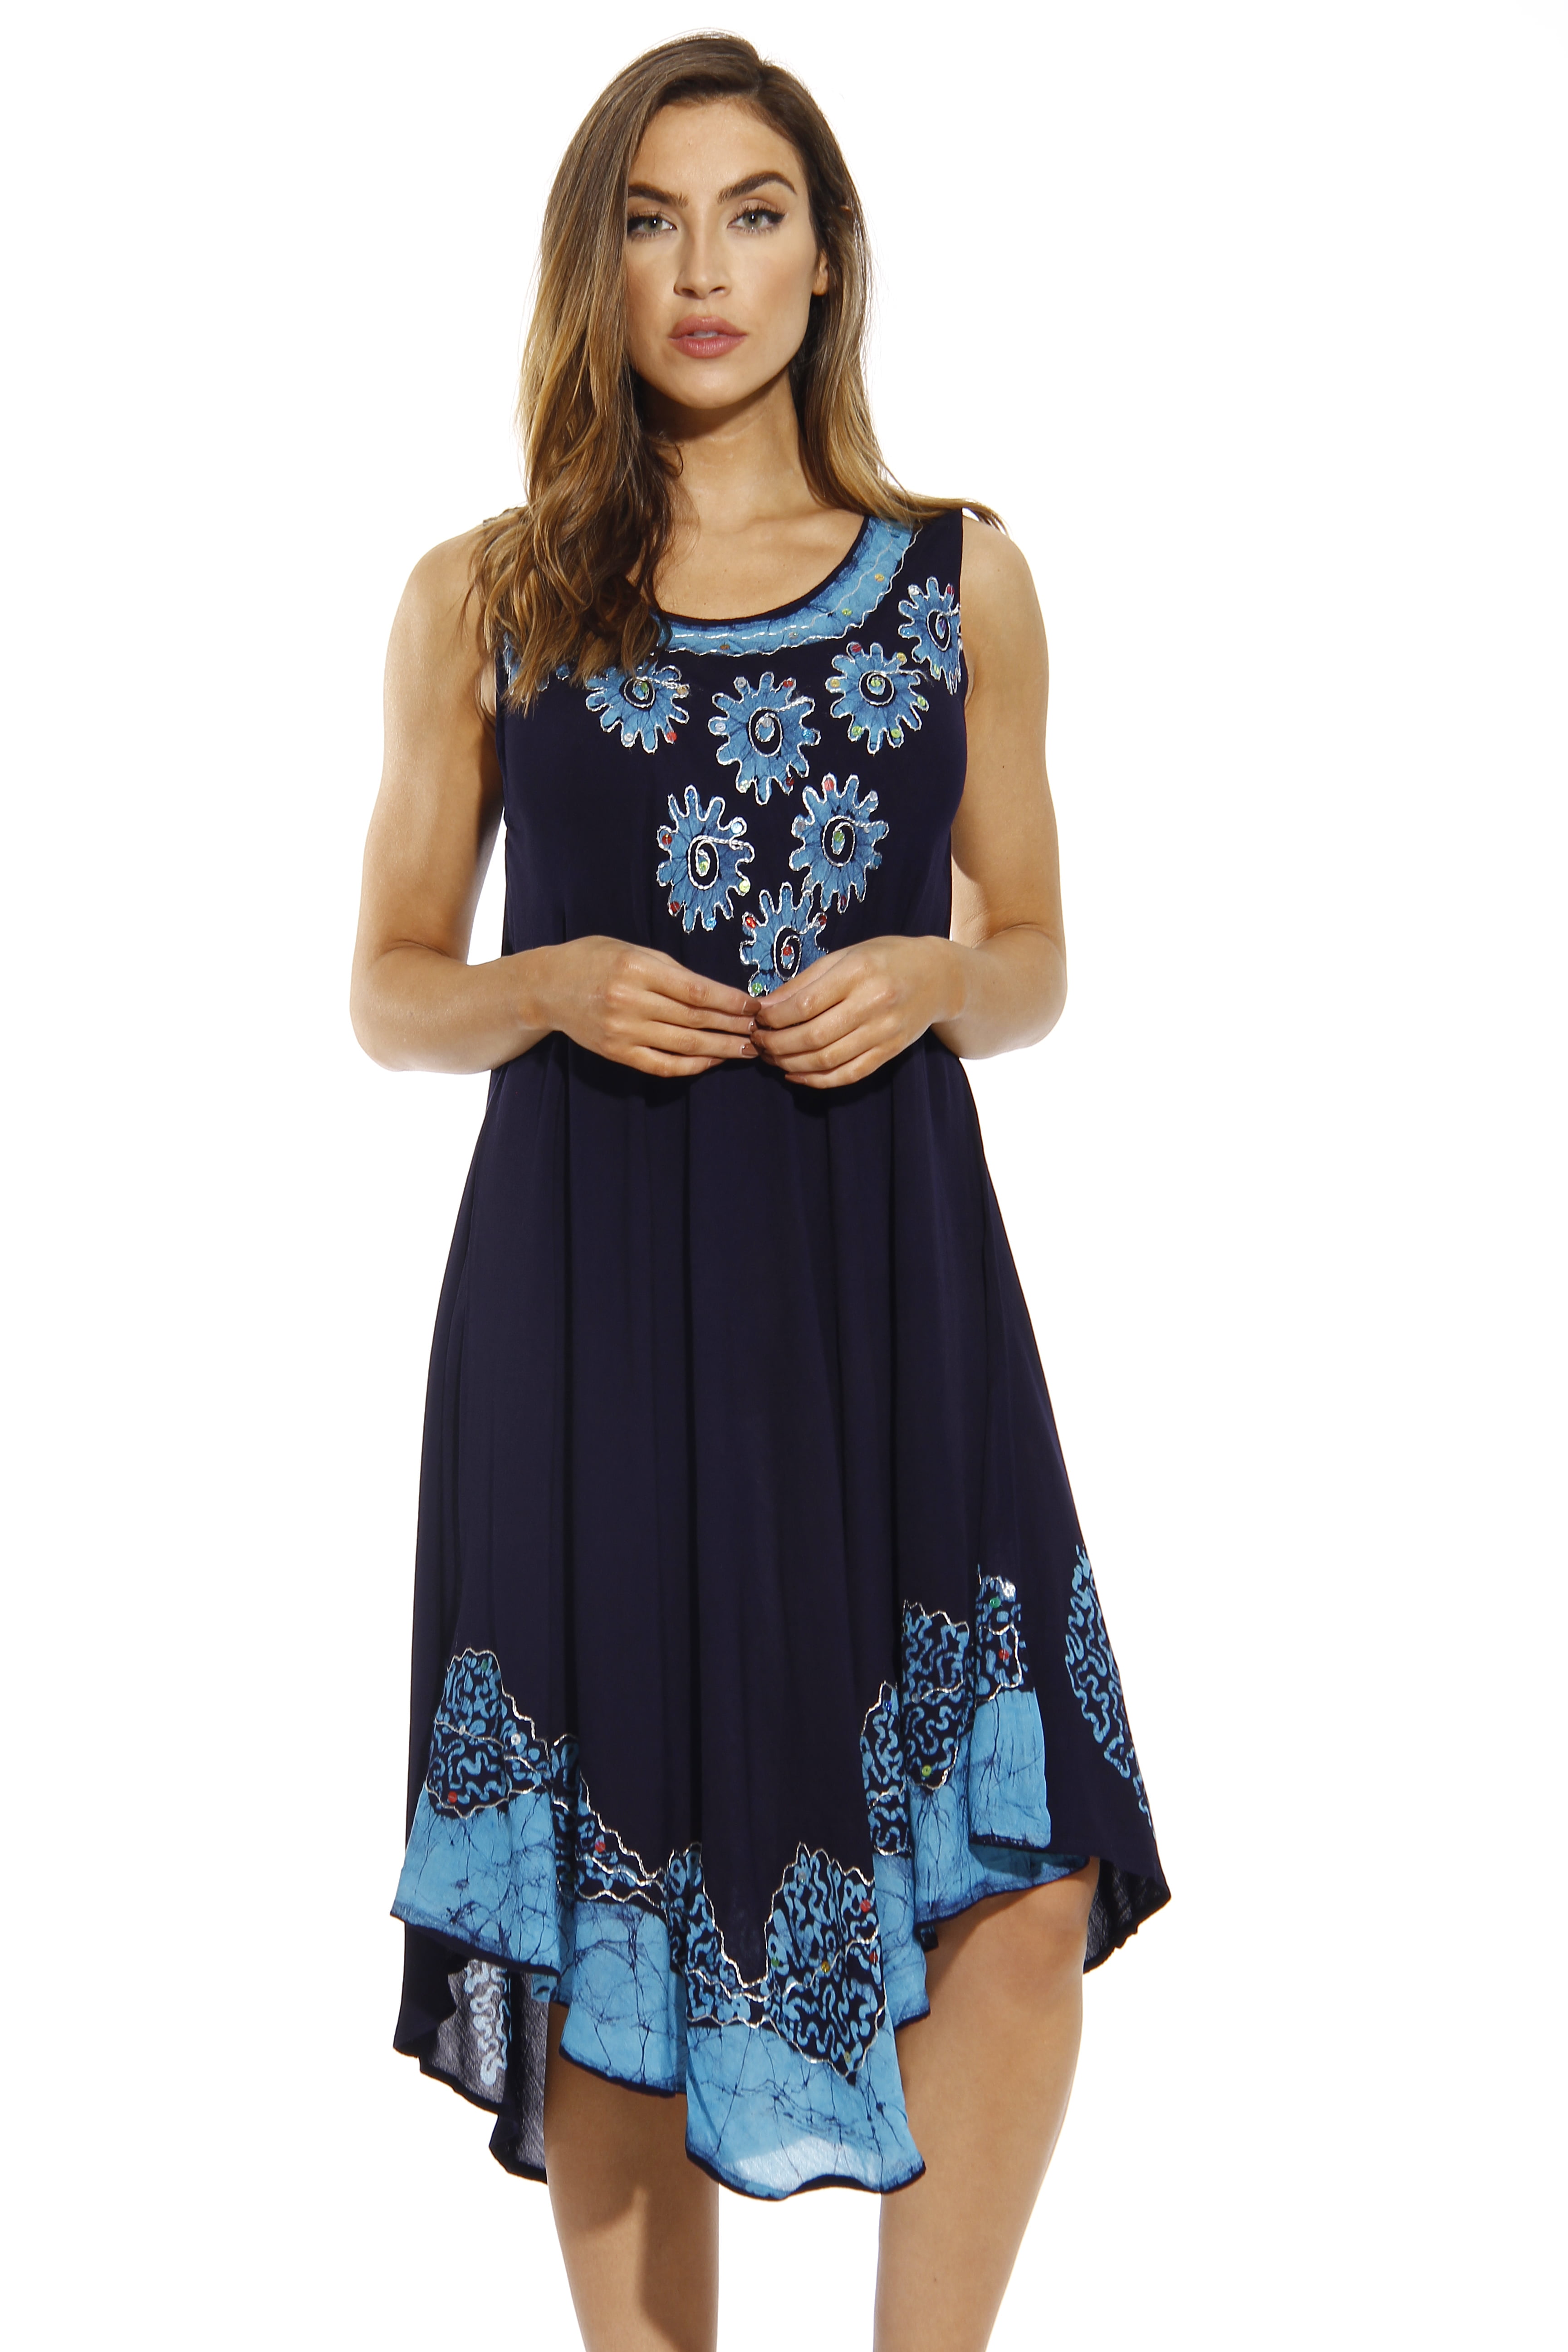 Riviera Sun - Riviera Sun Dress / Sundresses for Women (Navy / Blue, 3X ...